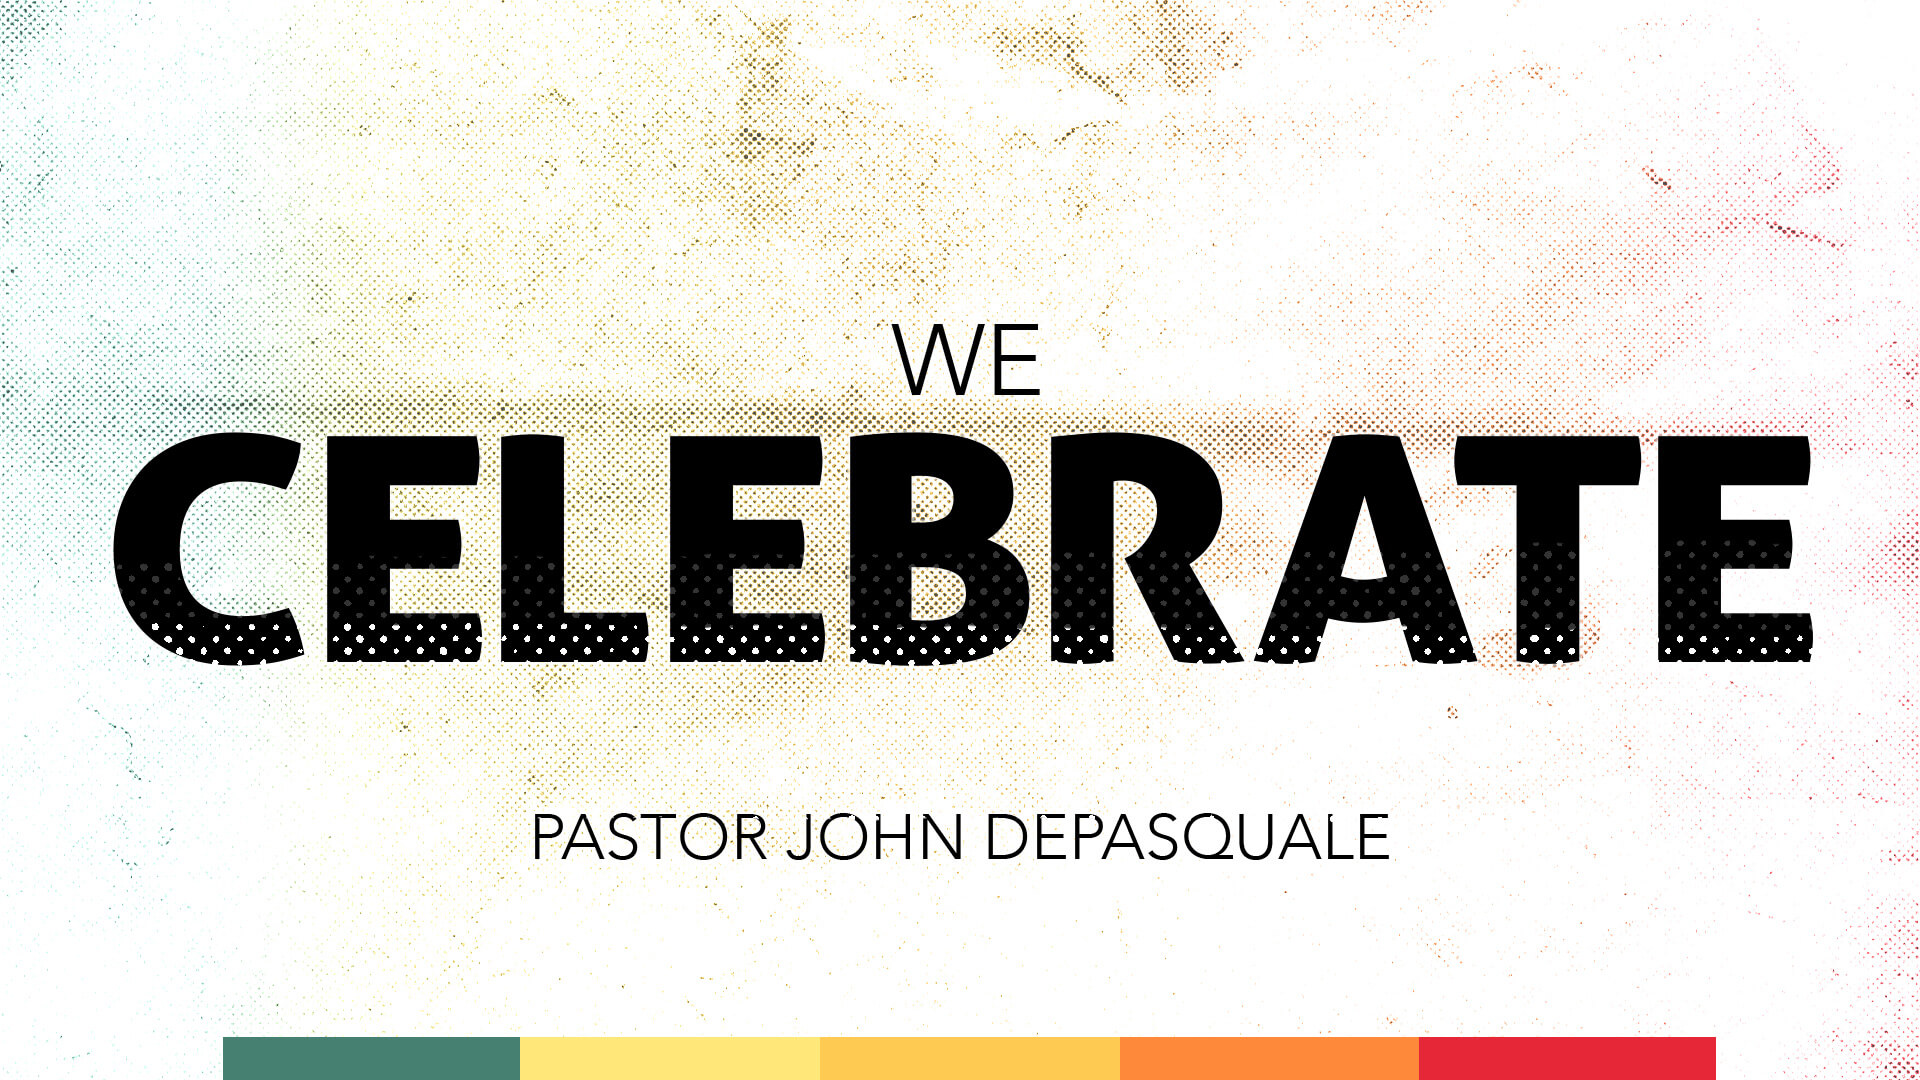 We Celebrate with Pastor John DePasquale